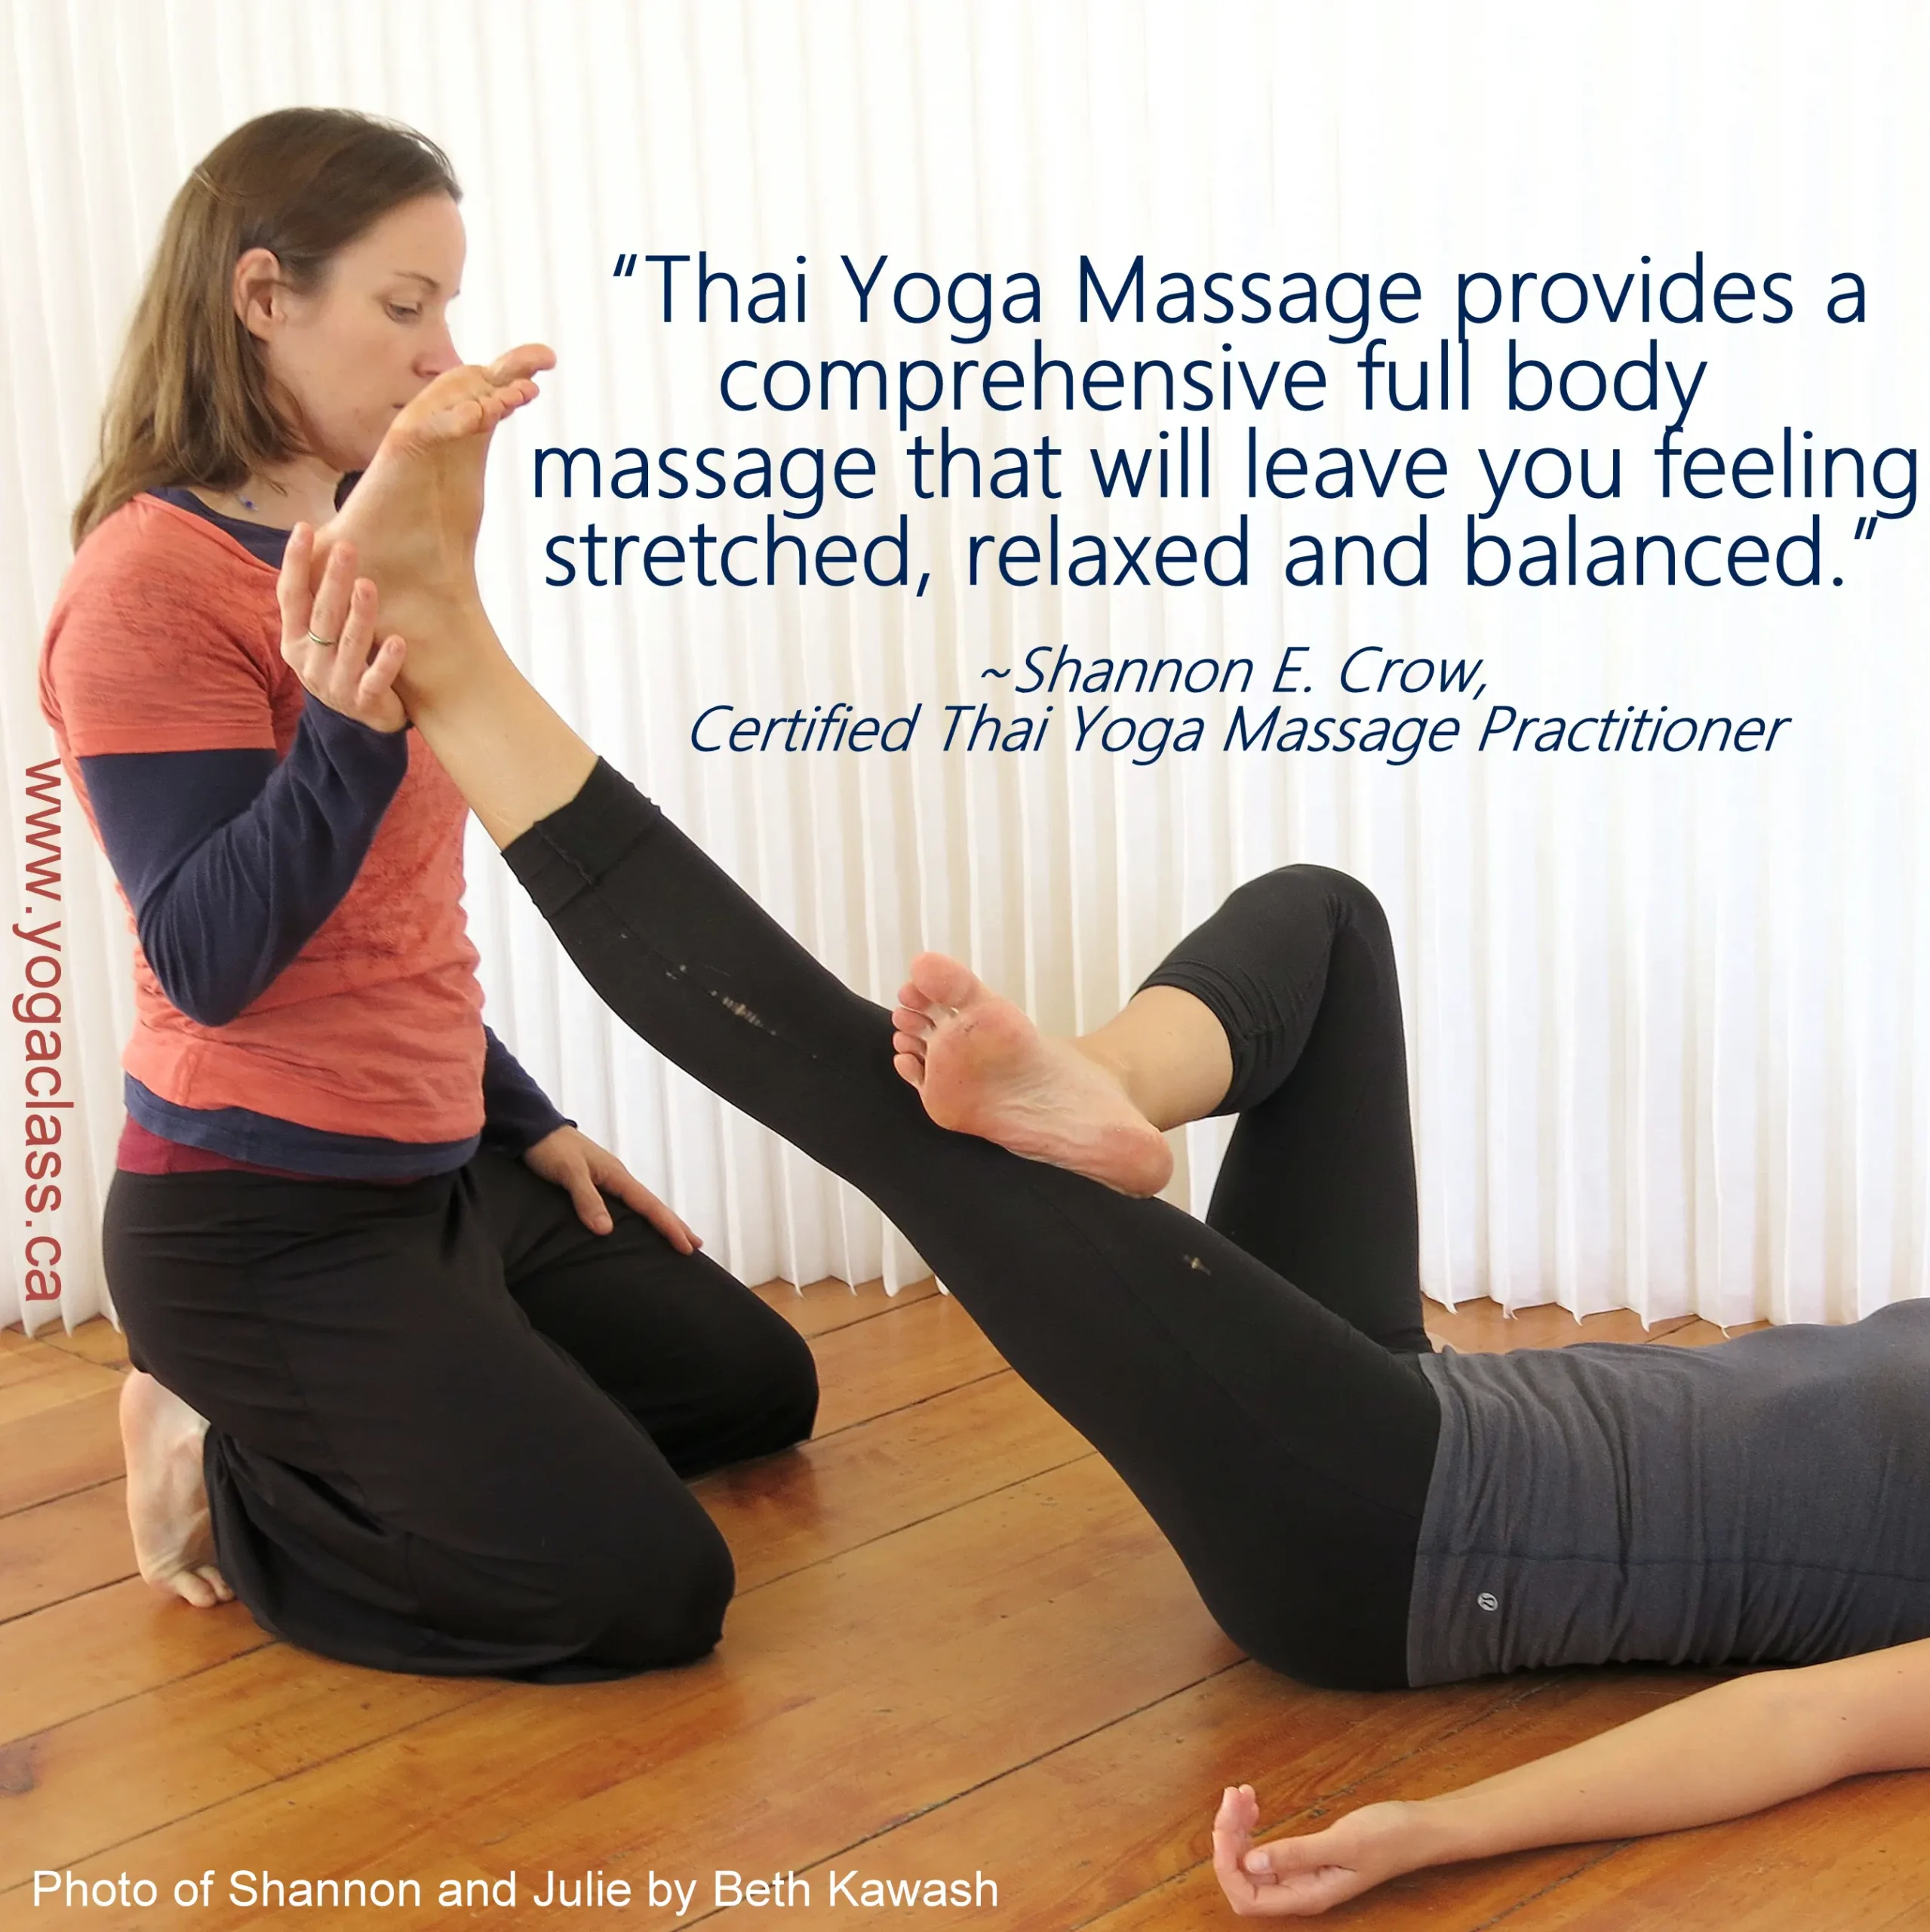 thai yoga massage benefits - Is Thai massage better than regular massage